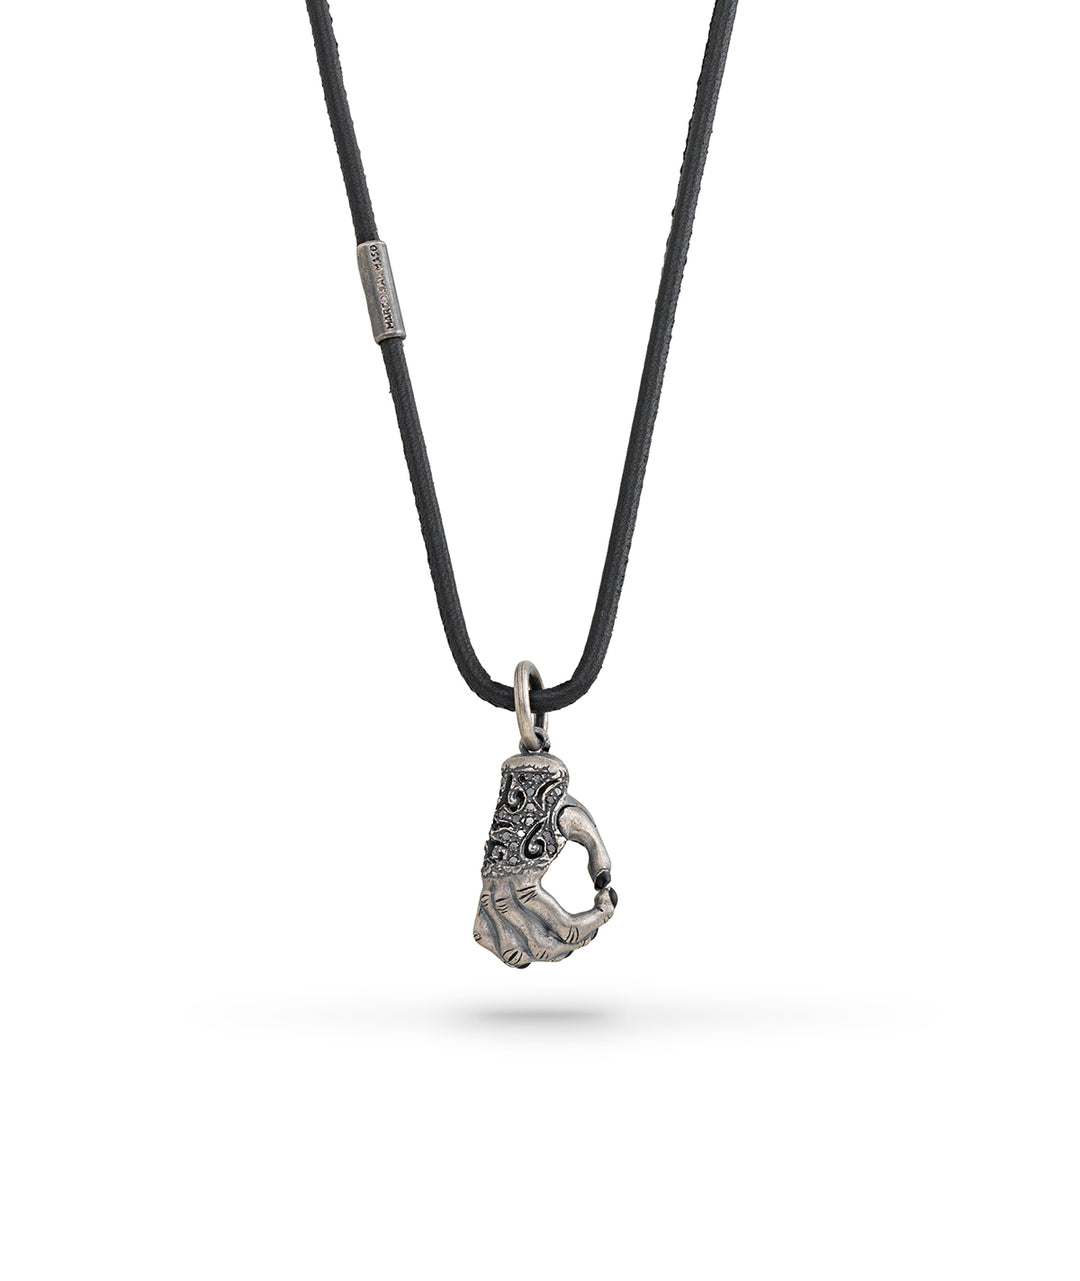 Fun-Key Monkey Oxidized Silver Pendant with black diamonds, enamel and leather